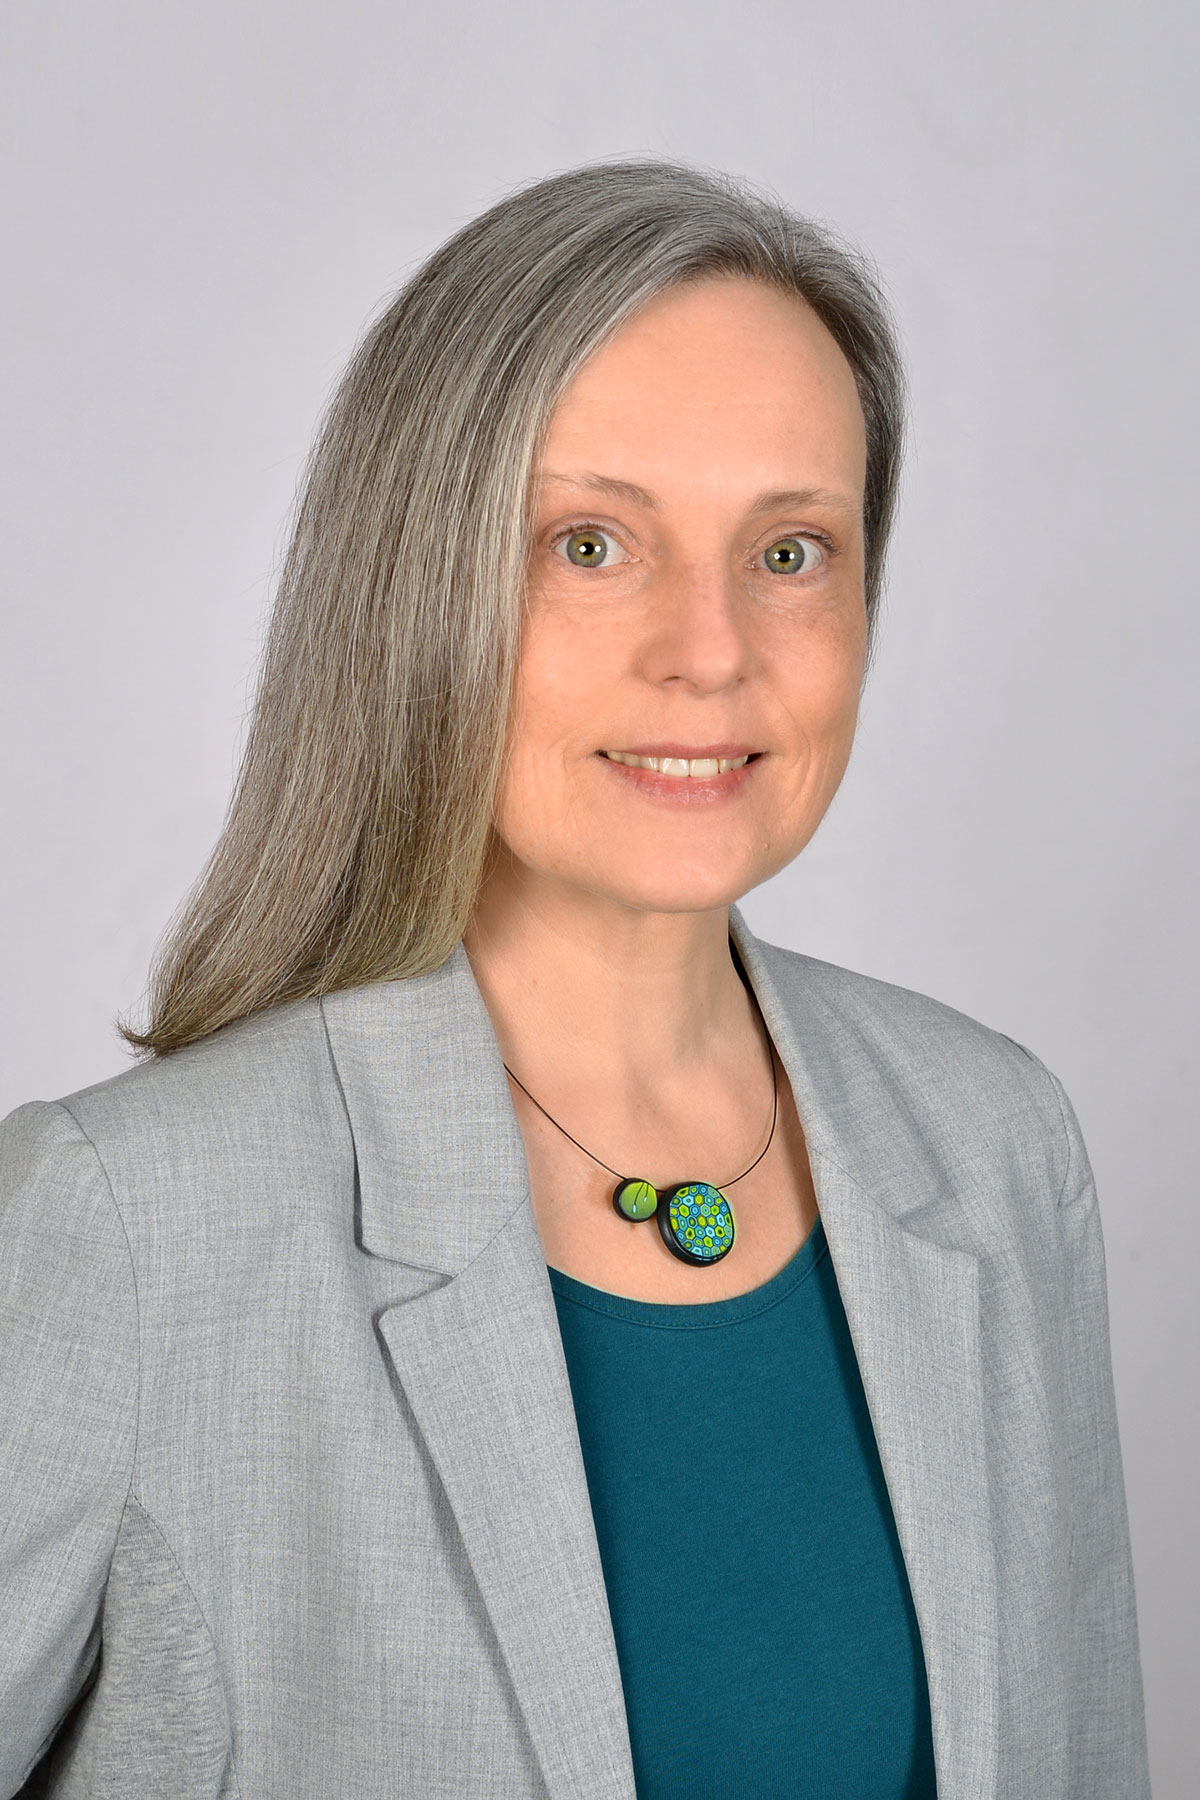 Profile picture for user Dr. Tatjana K. Schnütgen